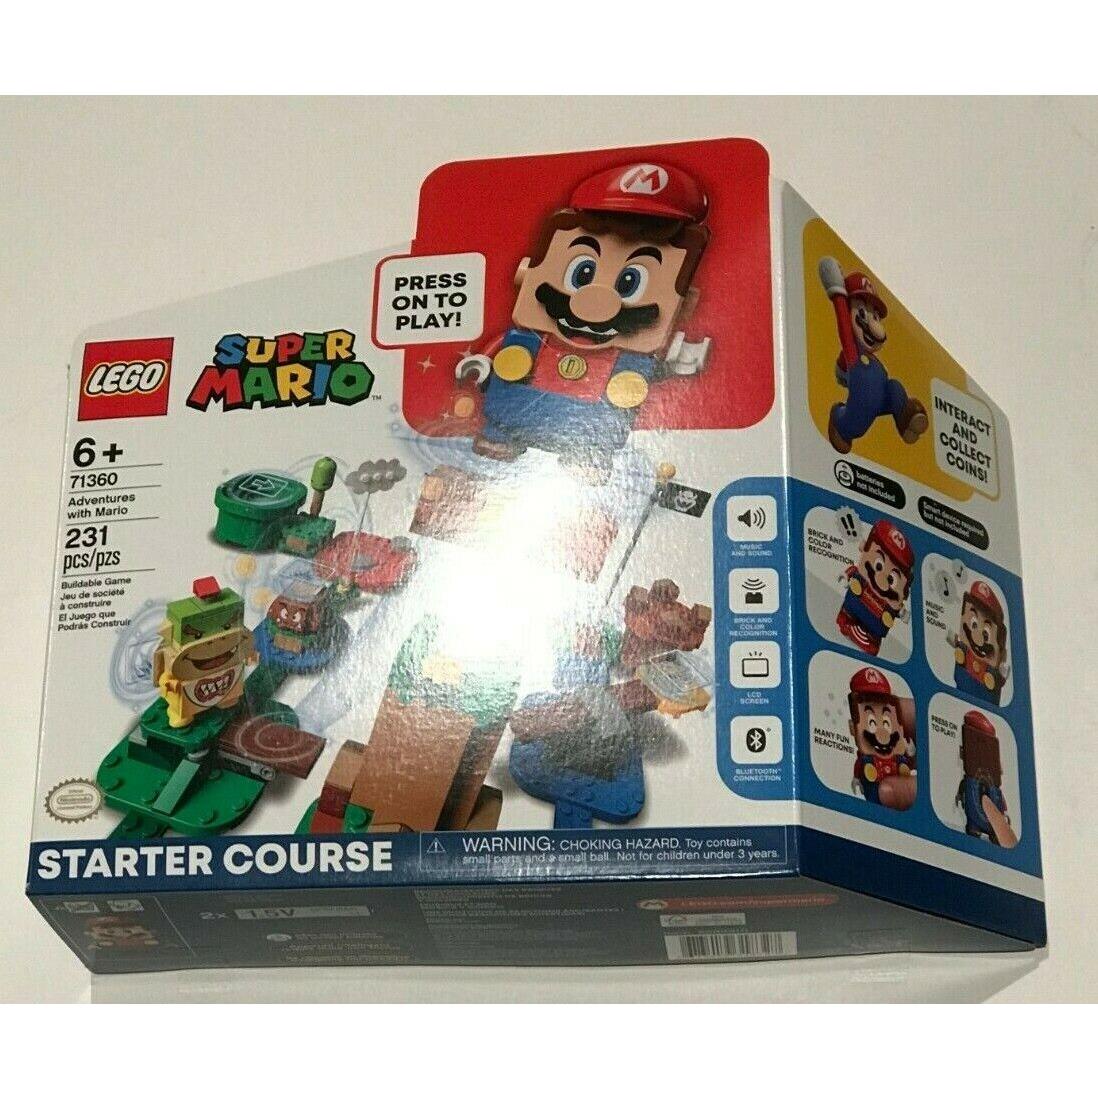 Lego Super Mario Adventure with Mario 231 Pieces Starter Course Set 71360